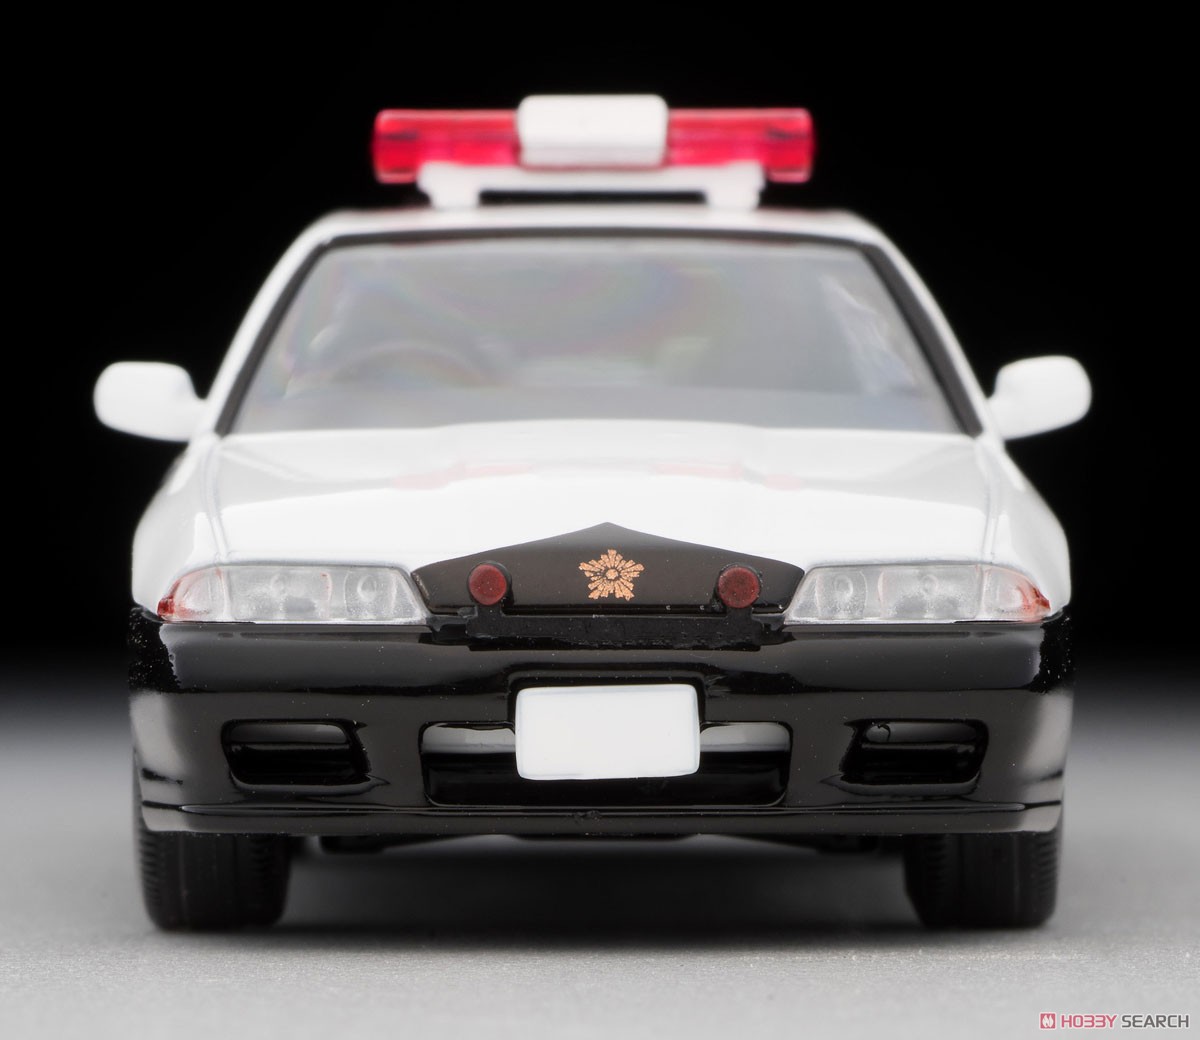 TLV-N212a スカイライン パトロールカー (茨城県警察) (ミニカー) 商品画像3